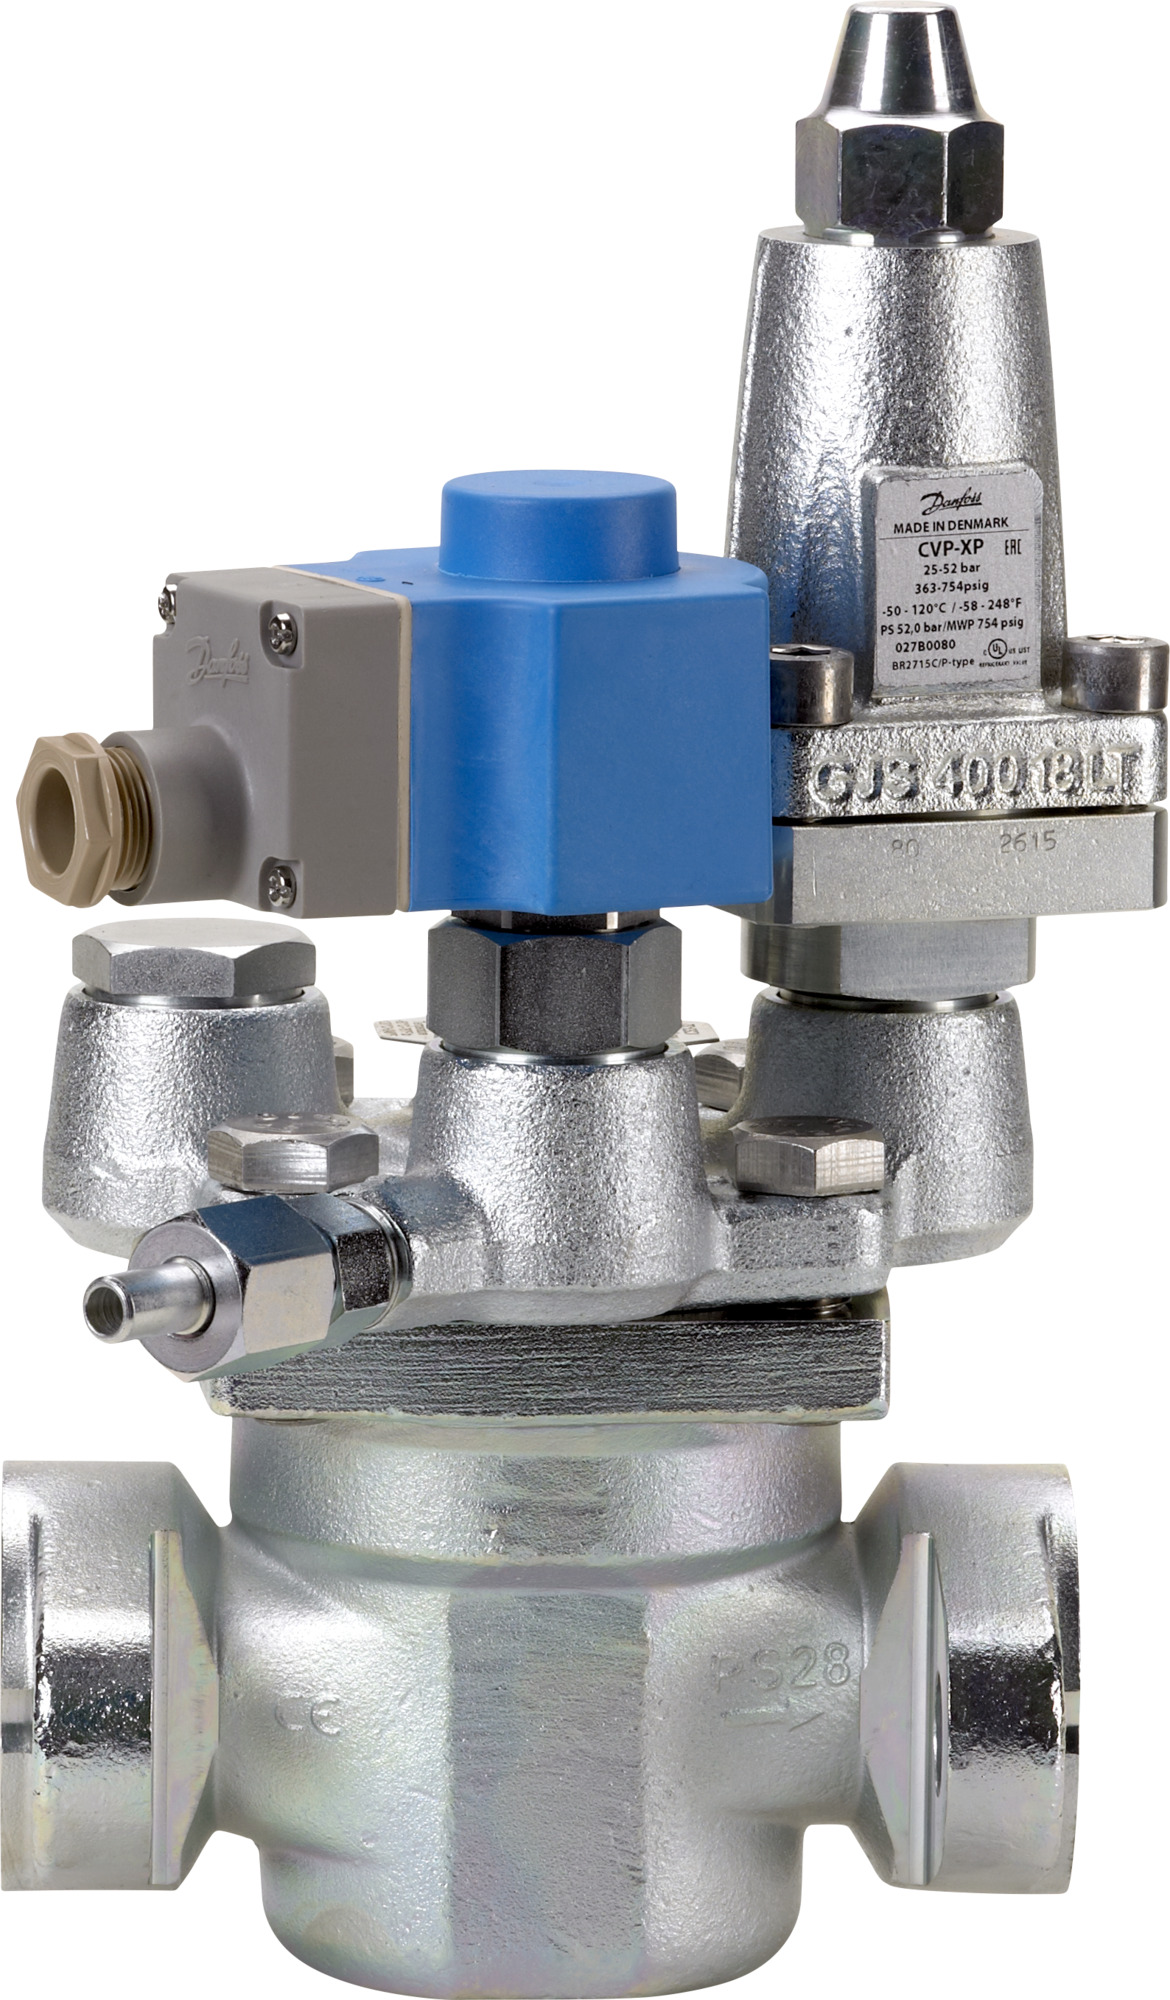 Multifunction valve body, ICV 65 PM, Flange